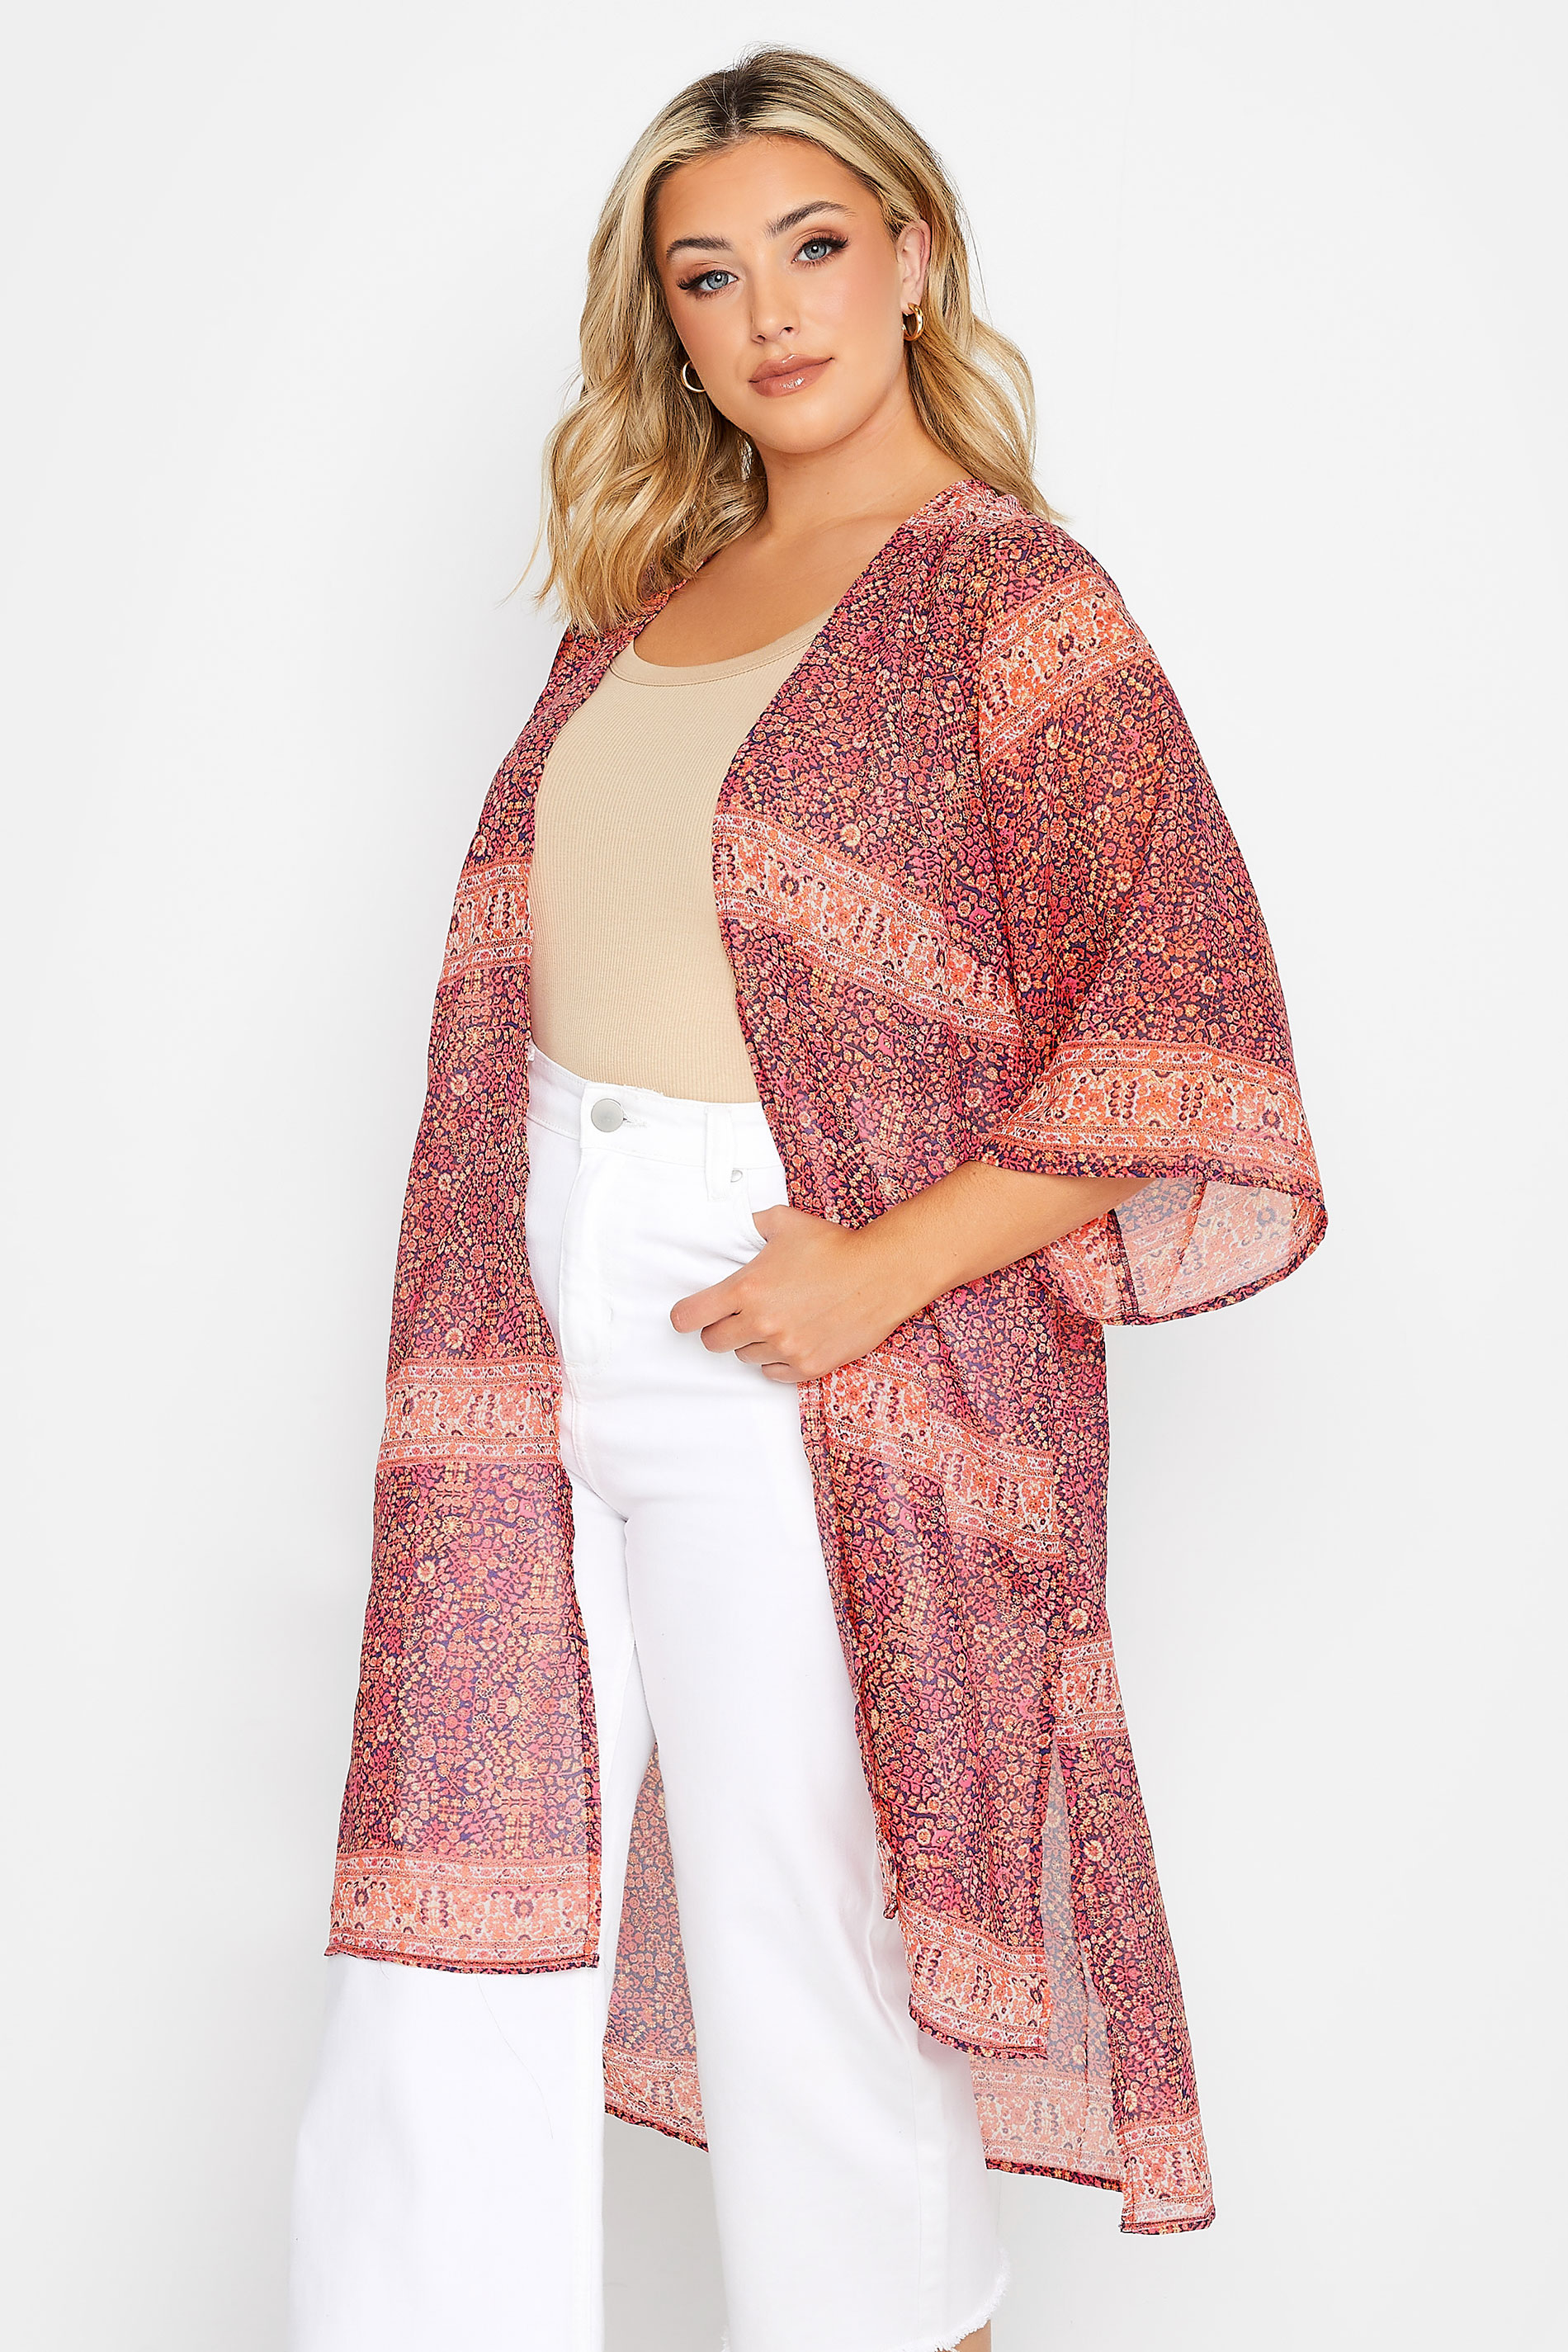 YOURS Plus Size Orange Mixed Floral Print Kimono | Yours Clothing 1